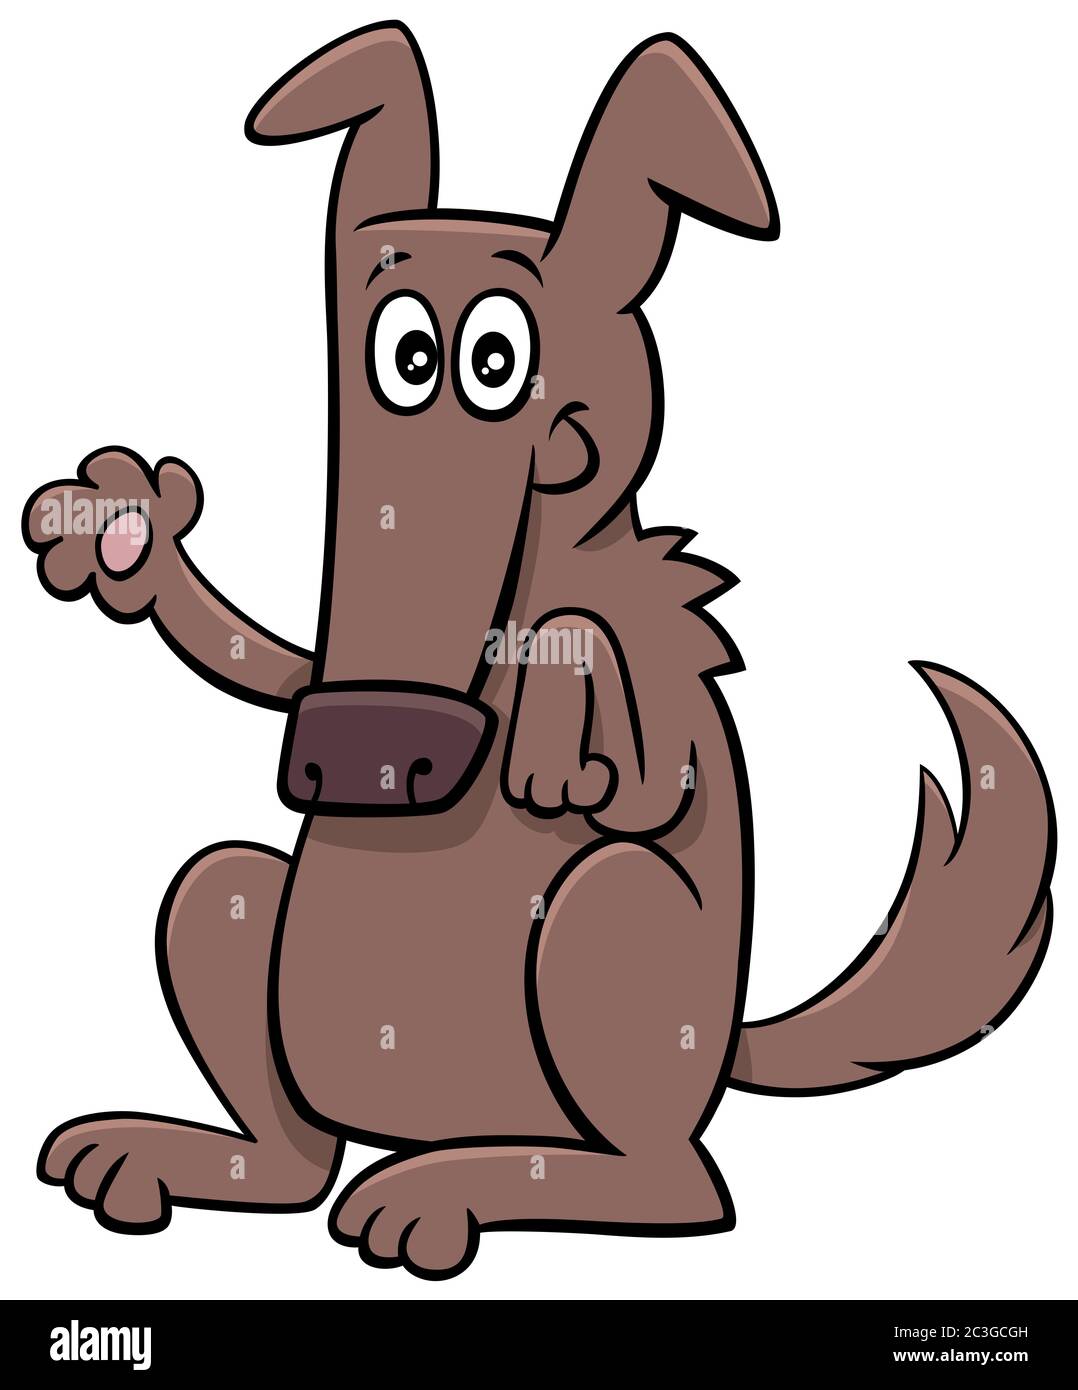 cartoon funny dog animal character waving paw Stock Photo - Alamy